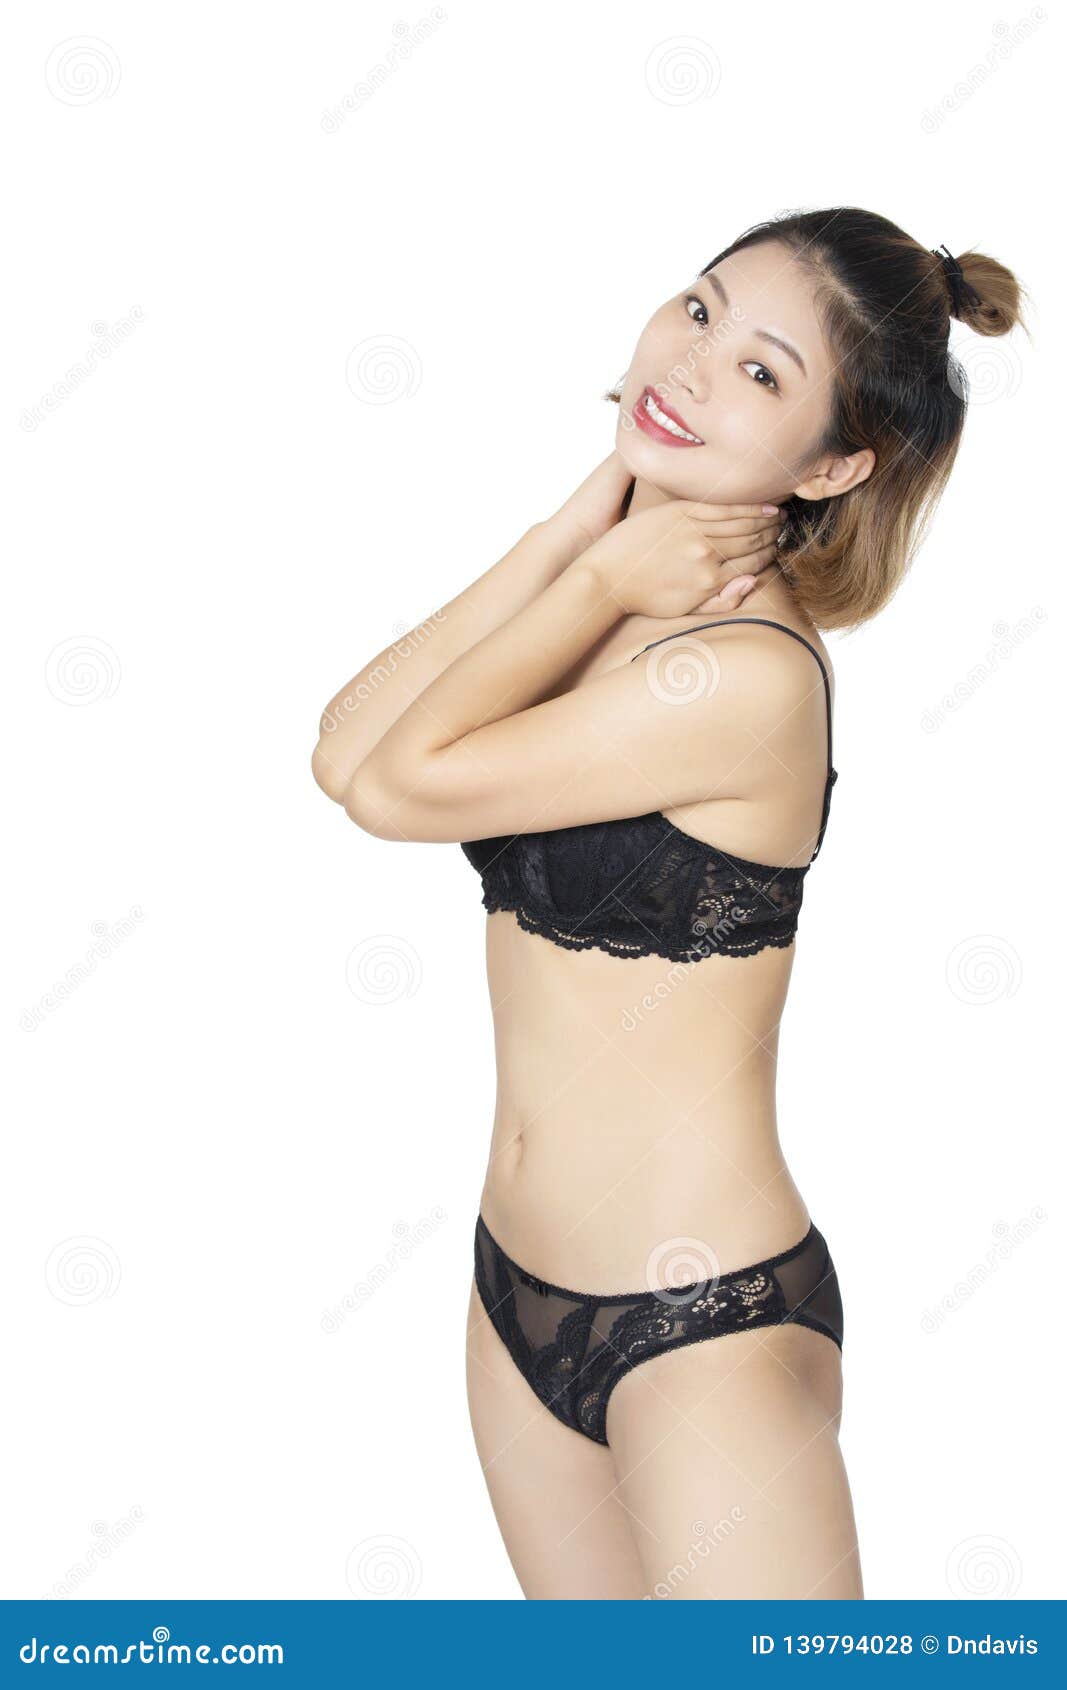 Mature woman posing in panties Chinese Woman Posing In Panties And Bra On White Background Stock Photo 139794028 Megapixl